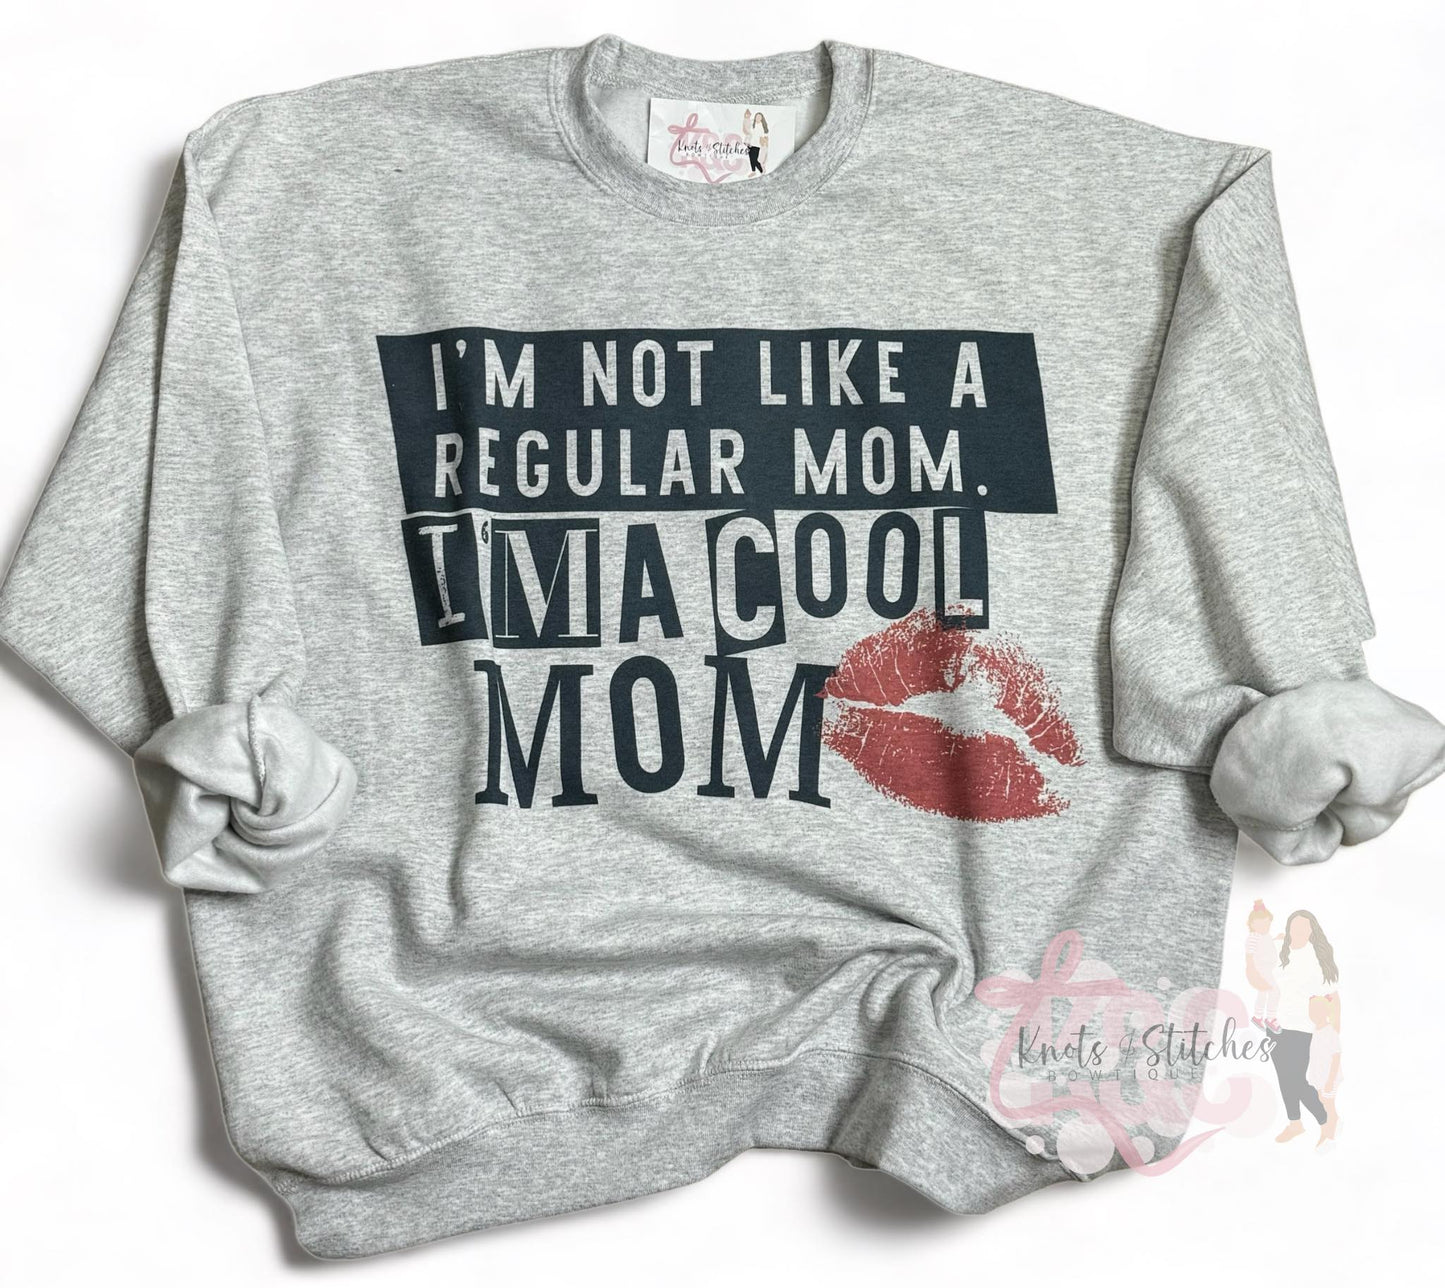 I'm a cool mom shirt